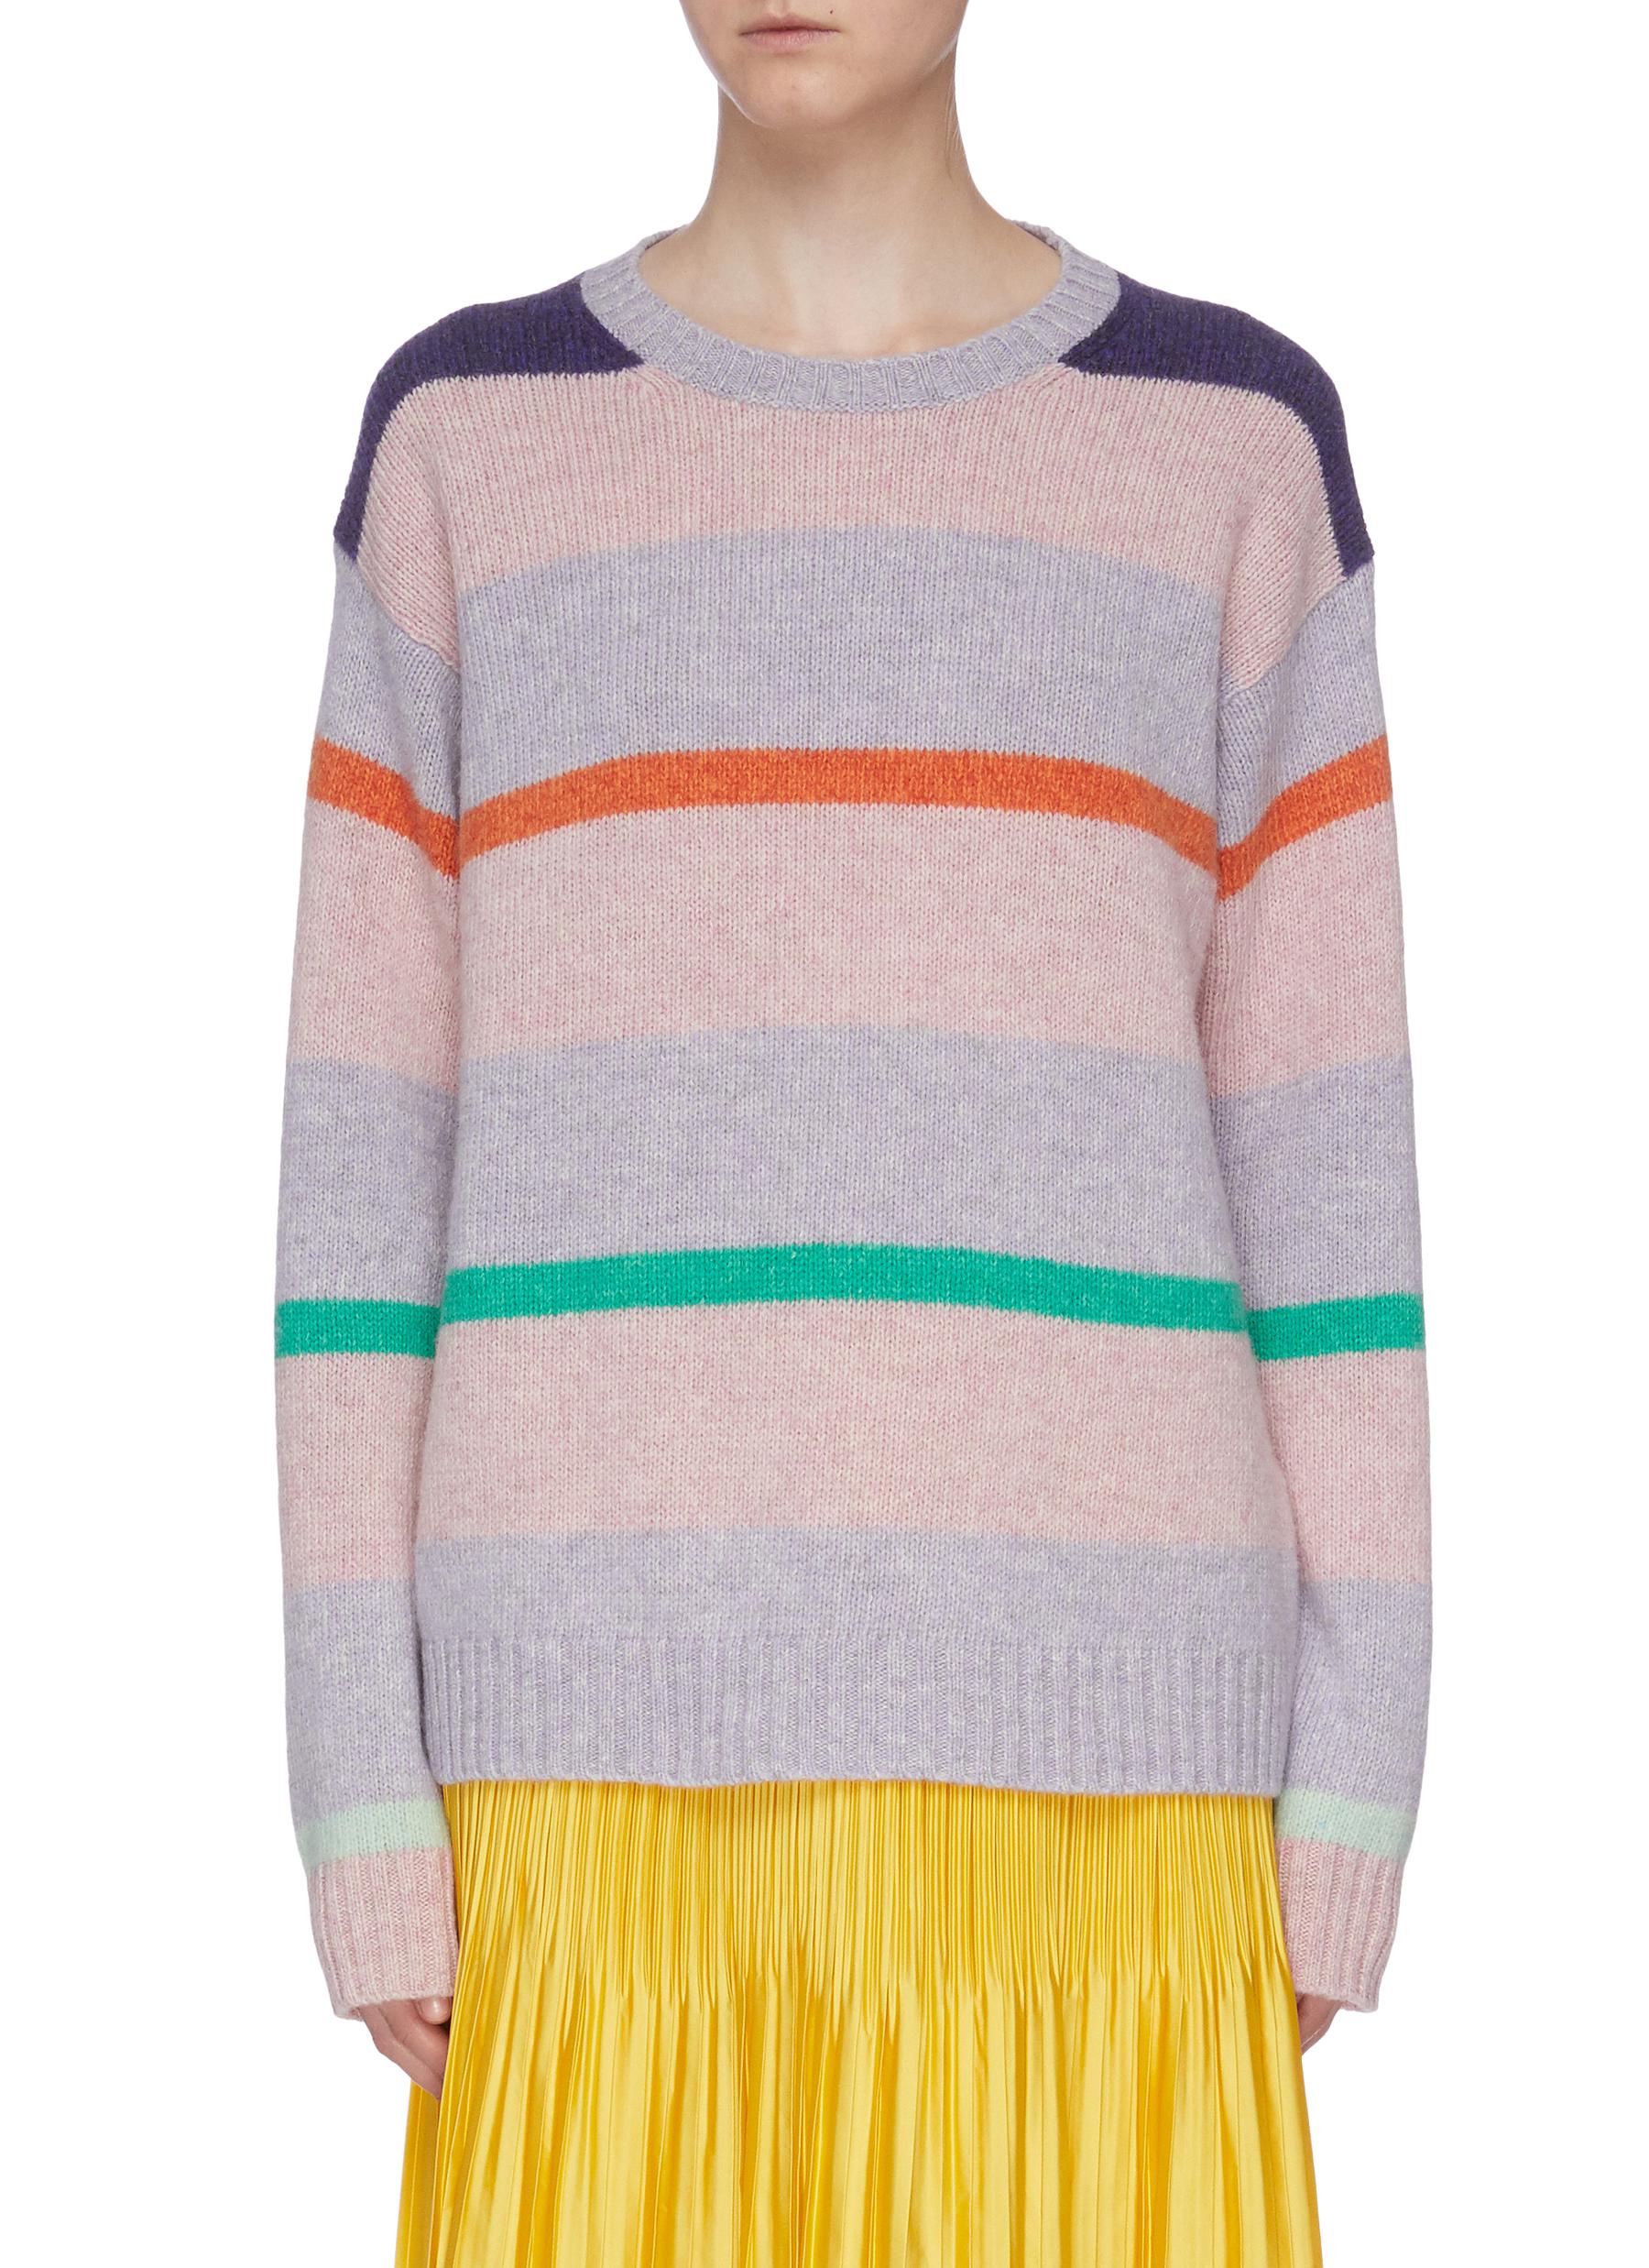 Colourblock stripe sweater by Acne Studios